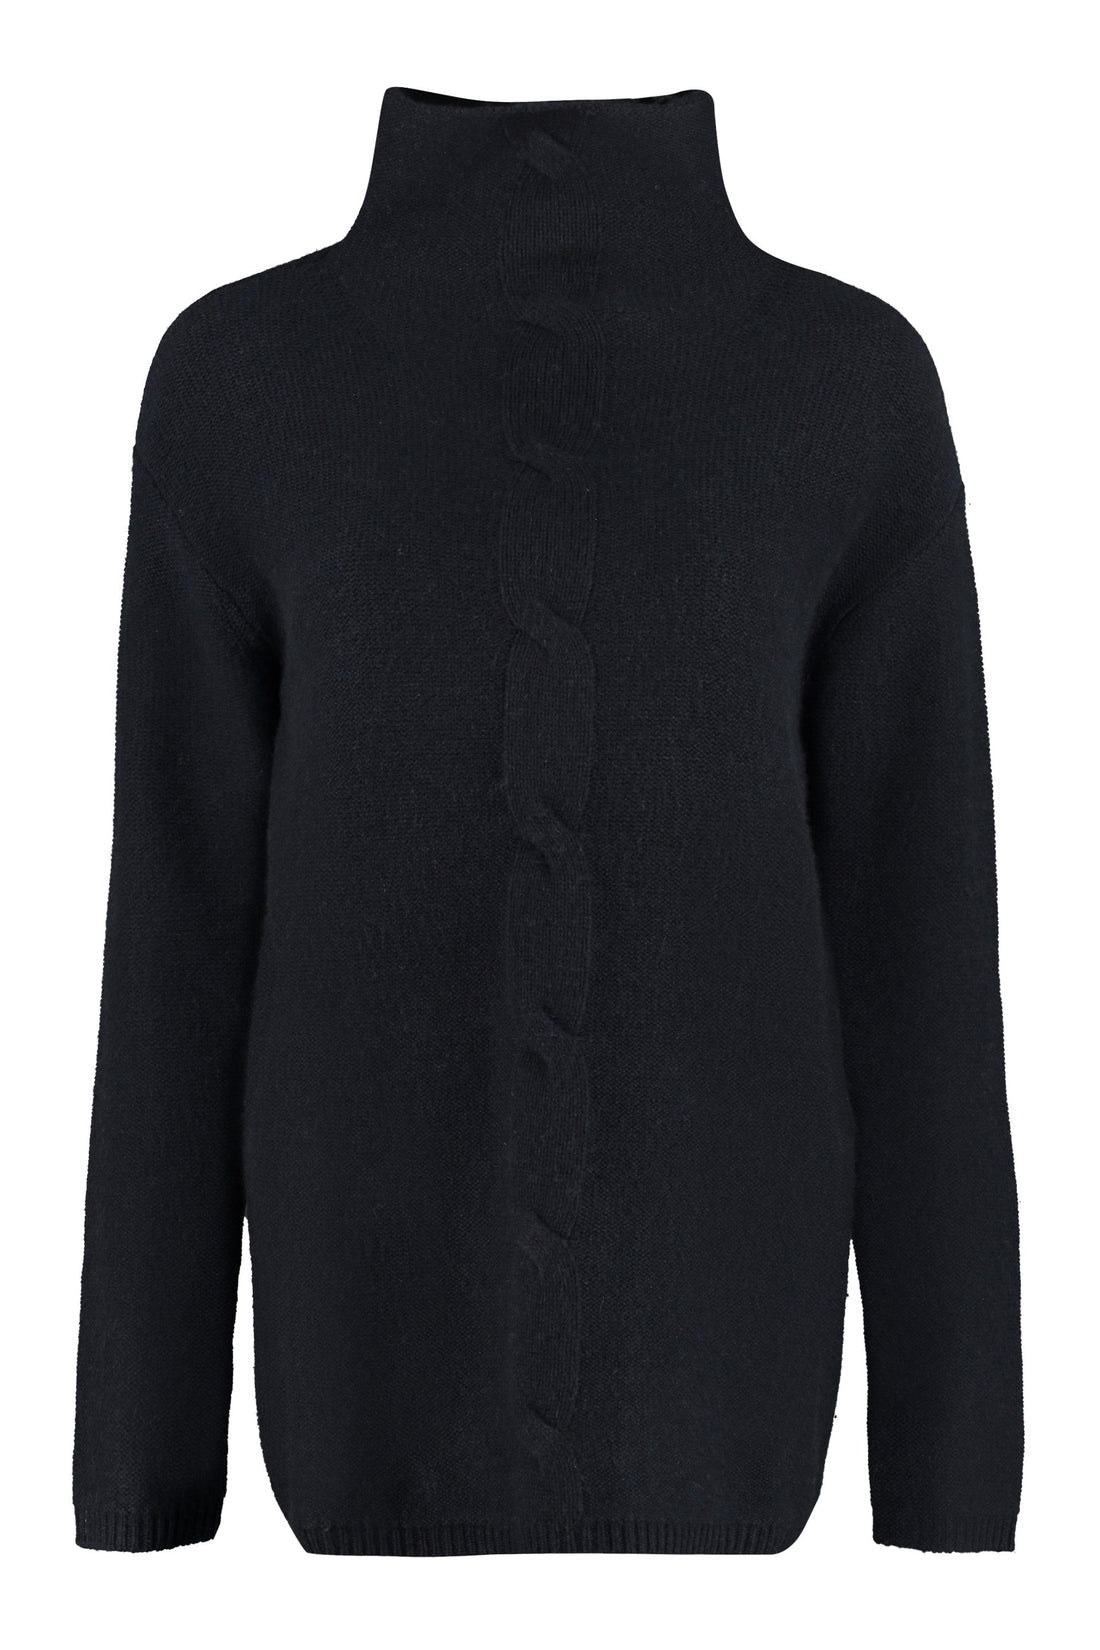 Max Mara-OUTLET-SALE-Caliga turtleneck sweater-ARCHIVIST